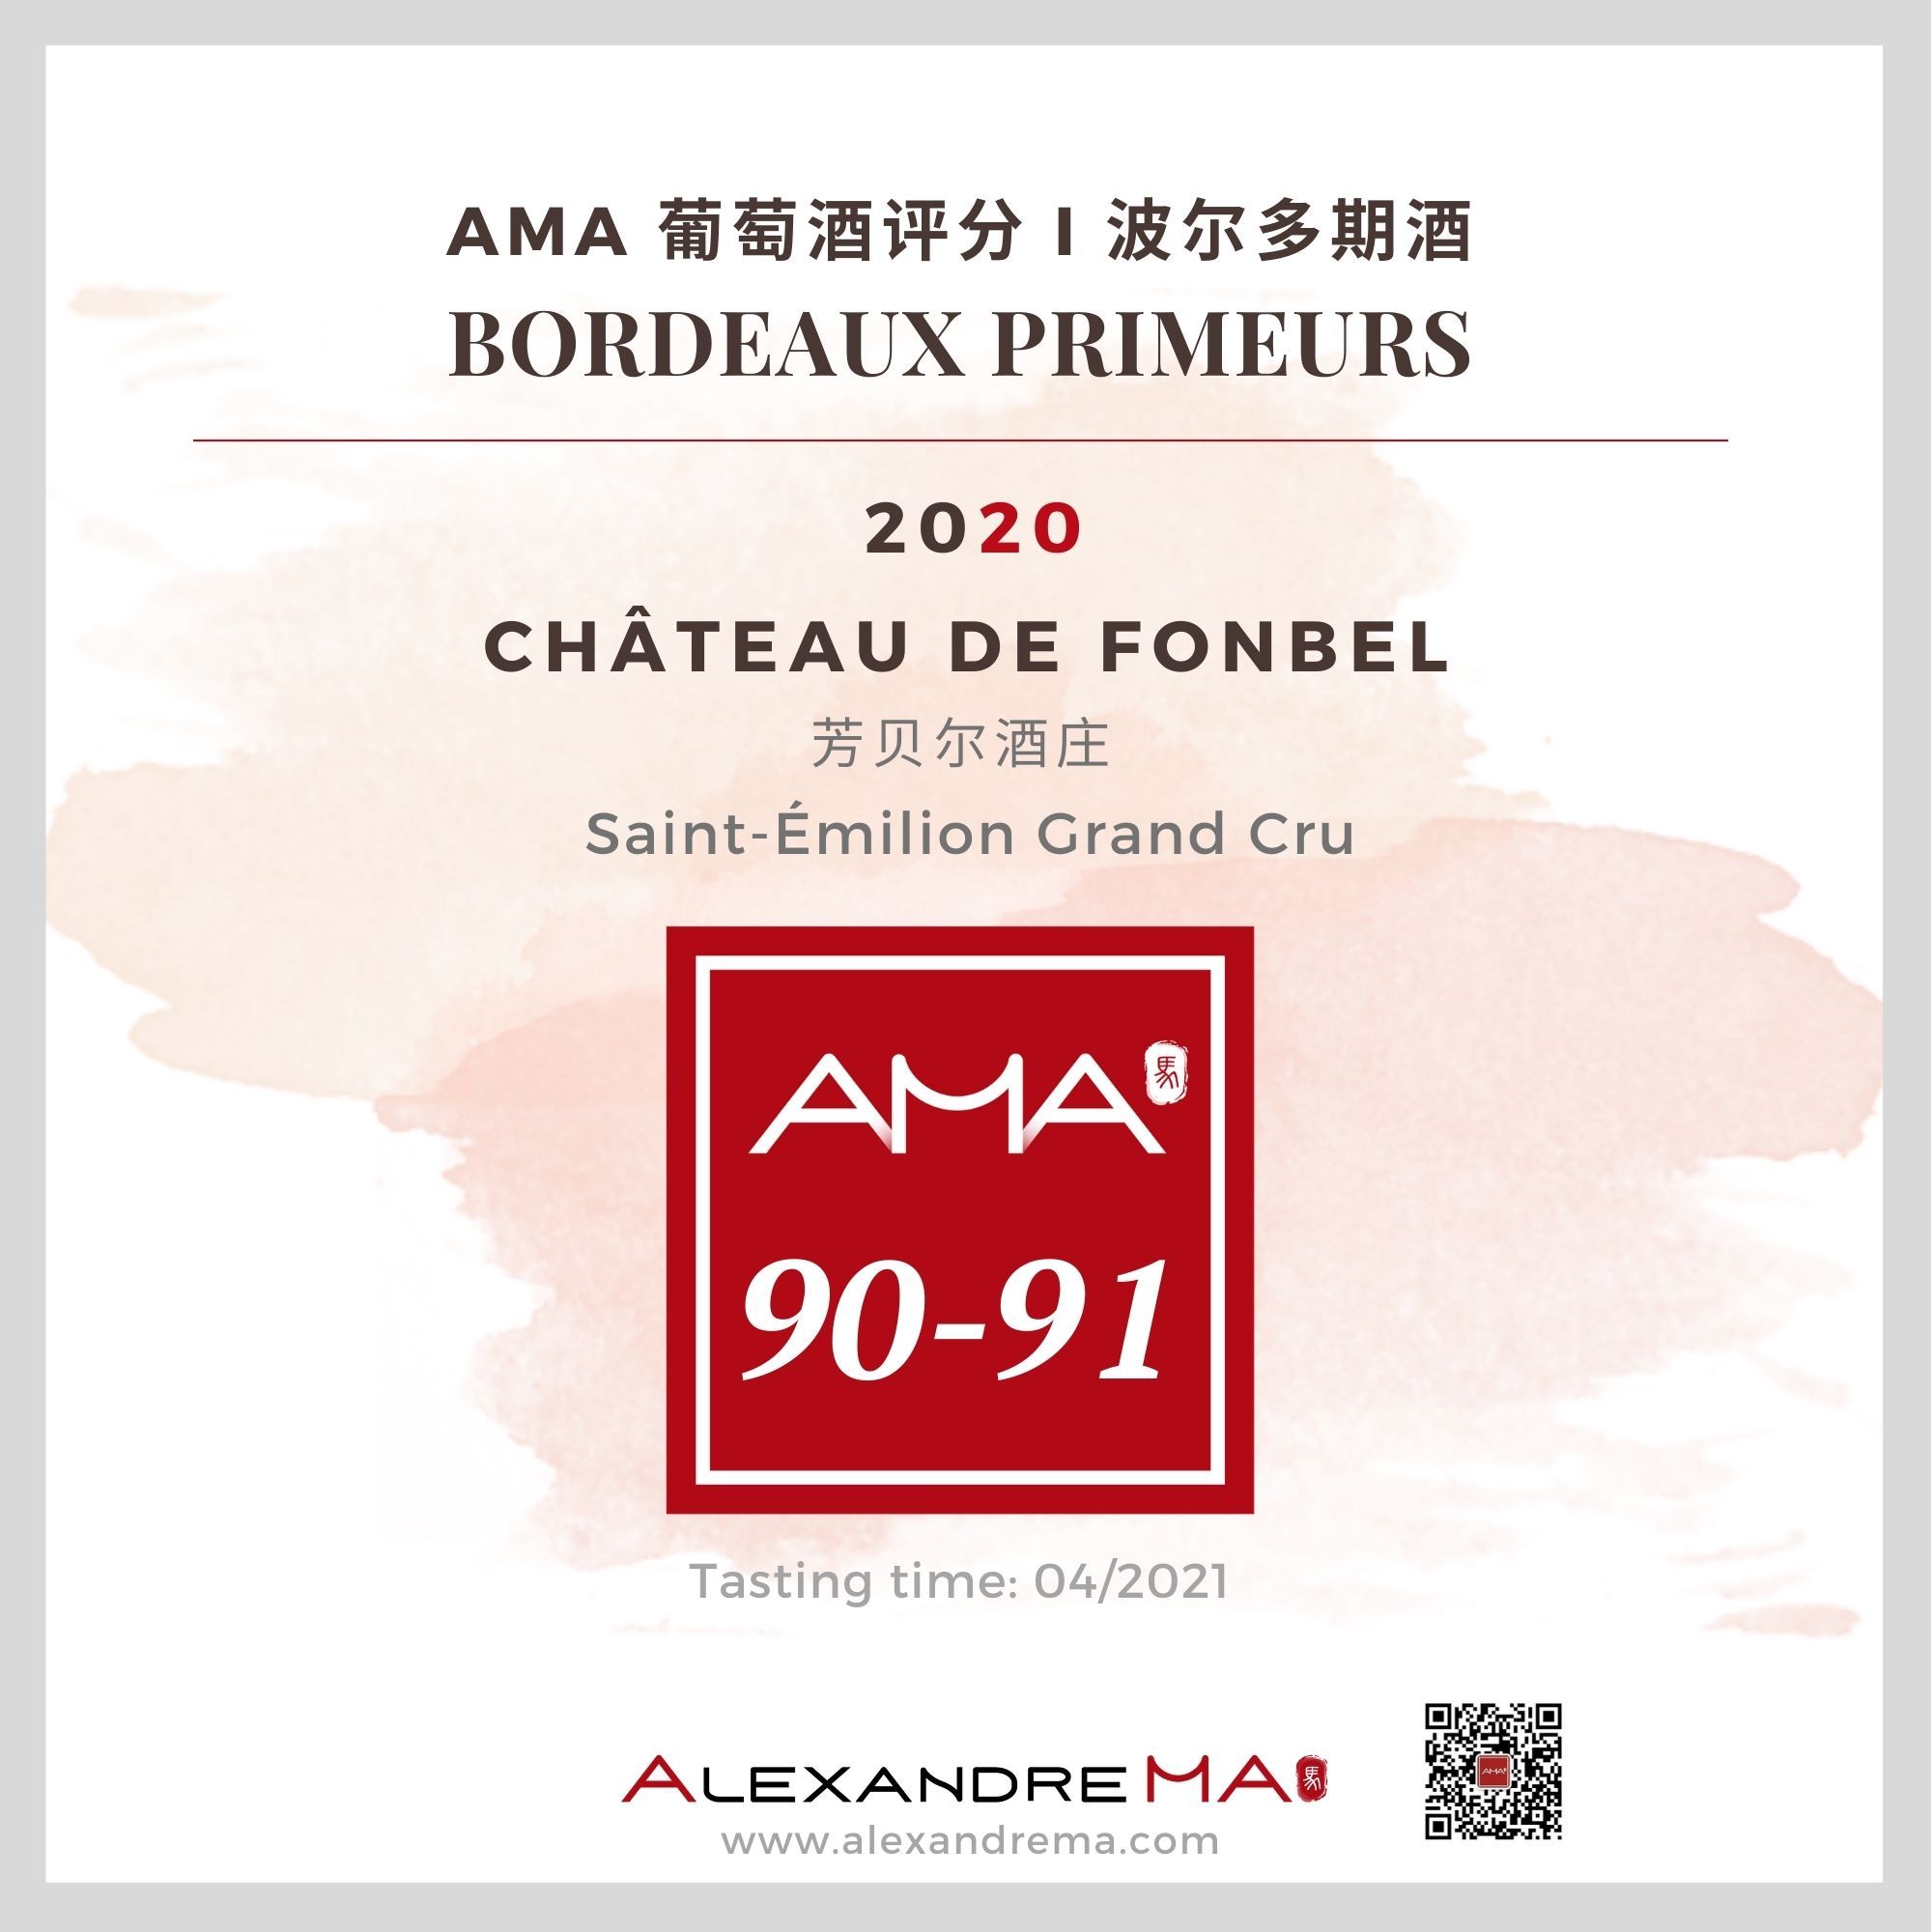 Château de Fonbel 2020 - Alexandre MA